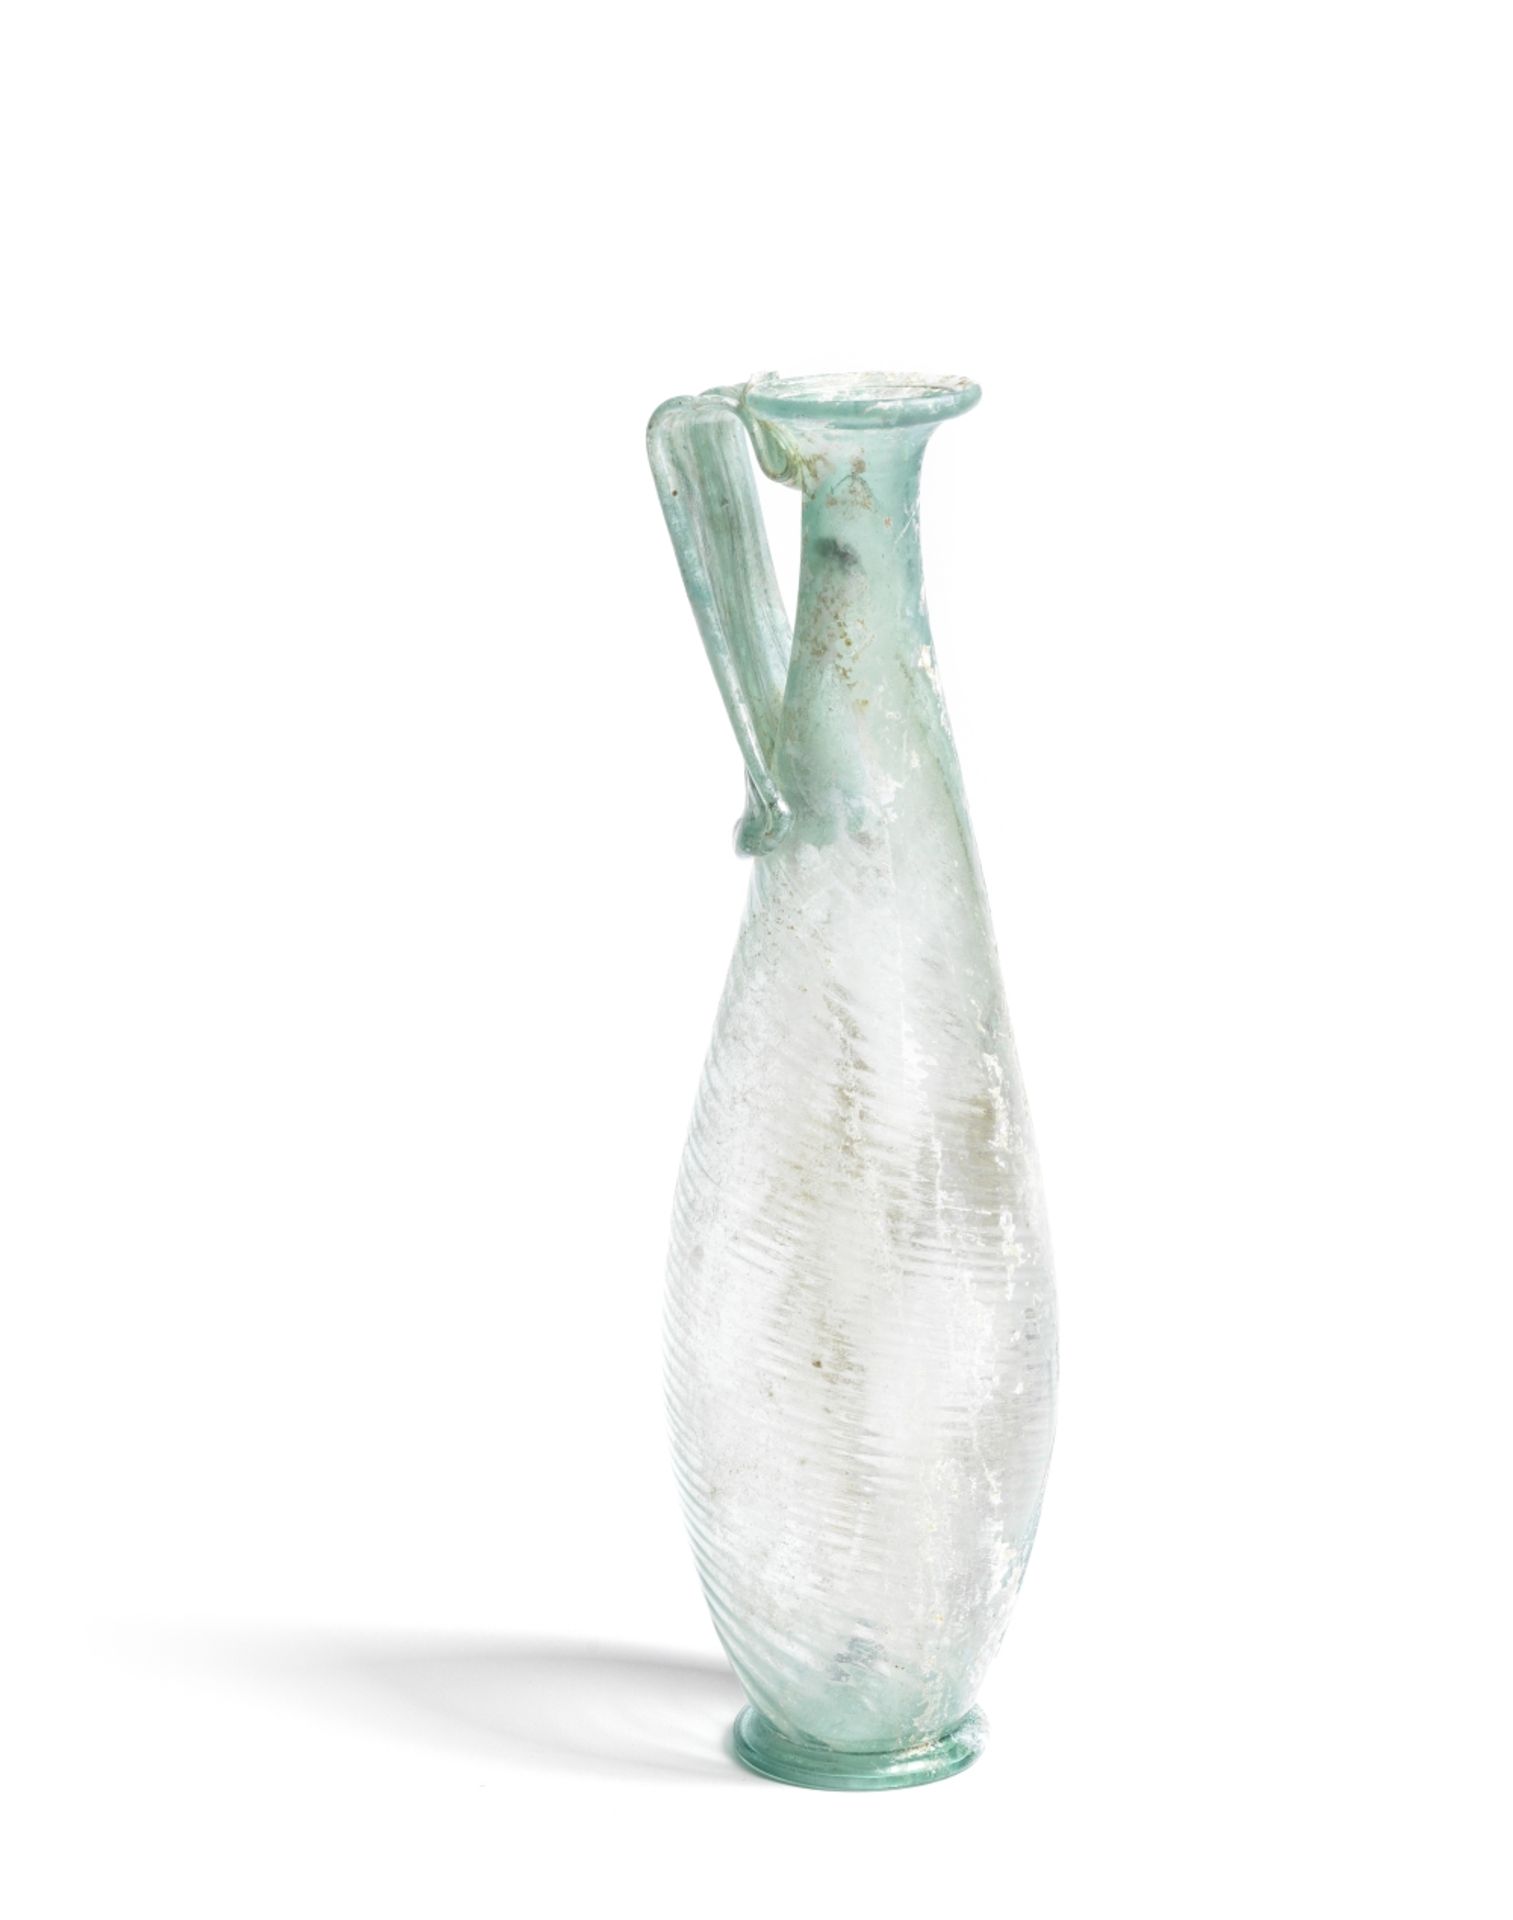 A tall slender Roman blue-green glass jug